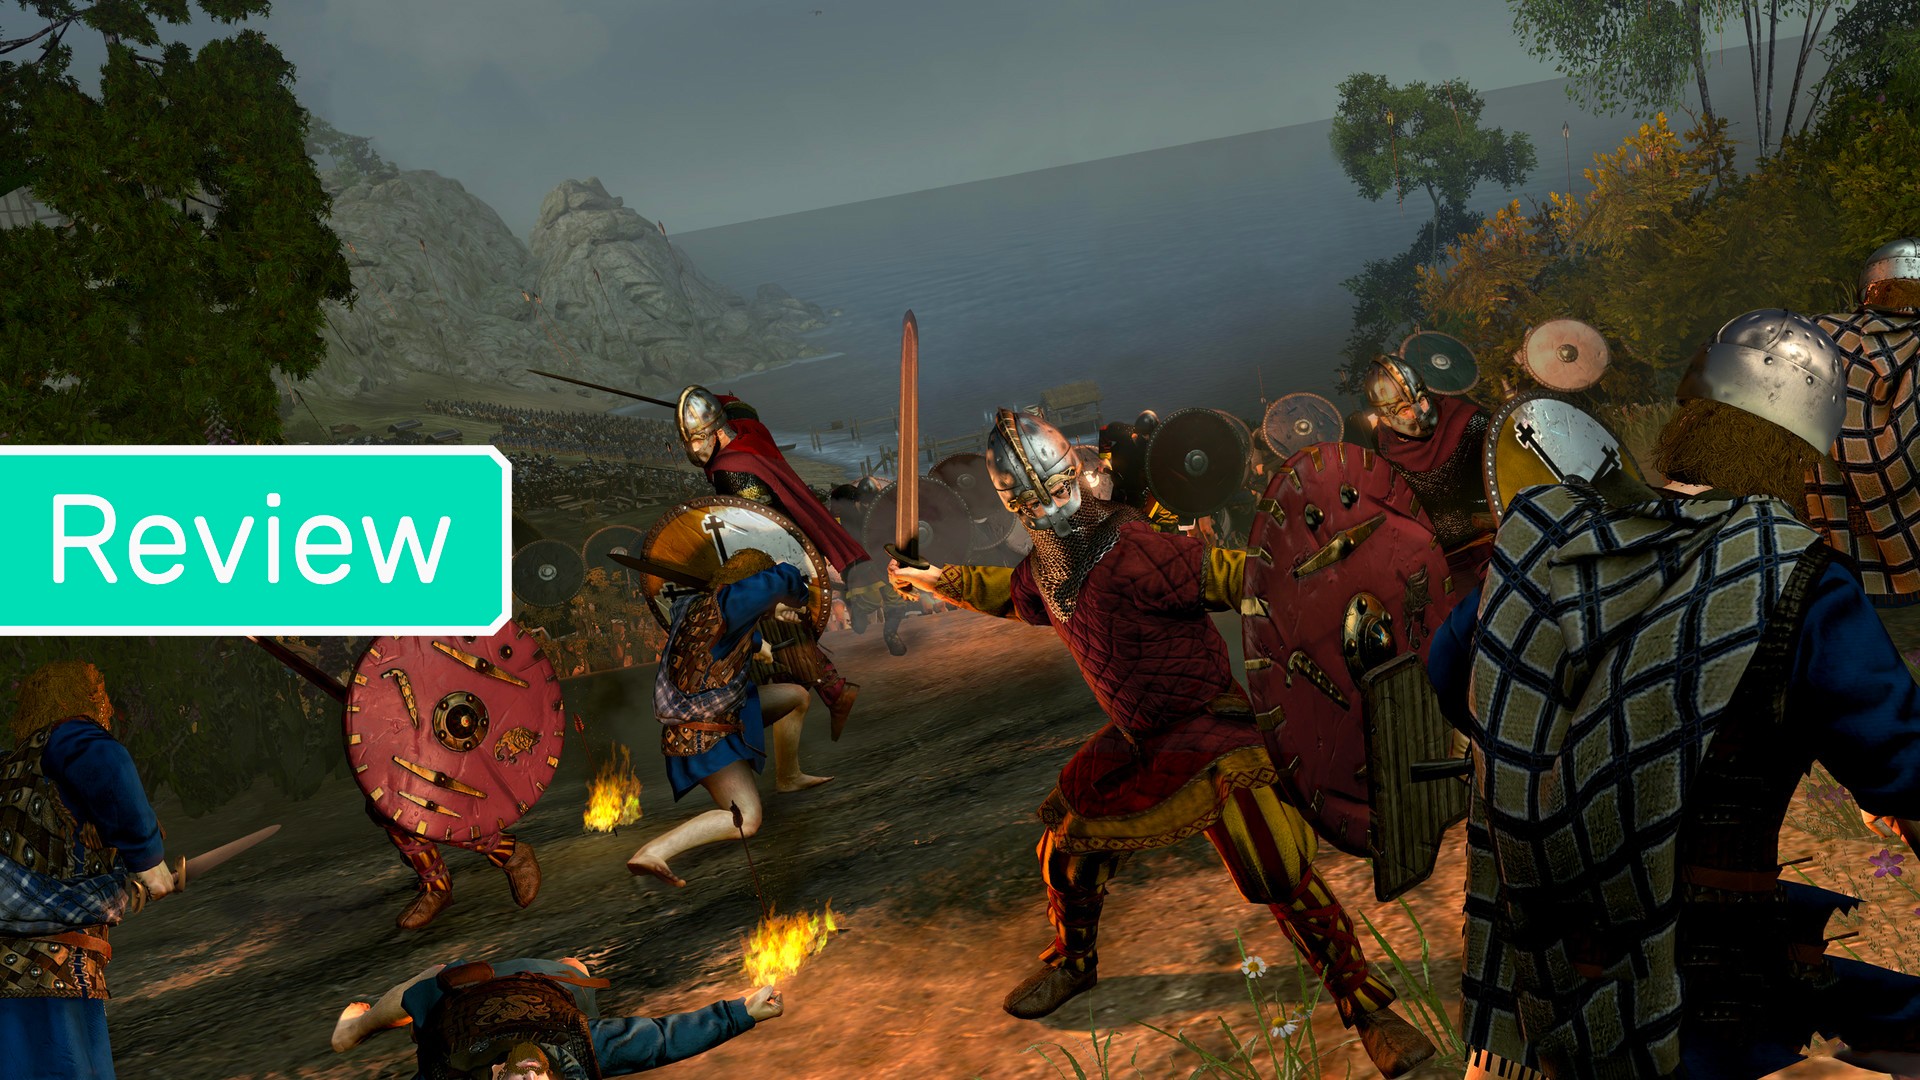 Crusader Kings III' is the Best Medieval Intrigue Simulator - New Stories -  Waypoint - Forum